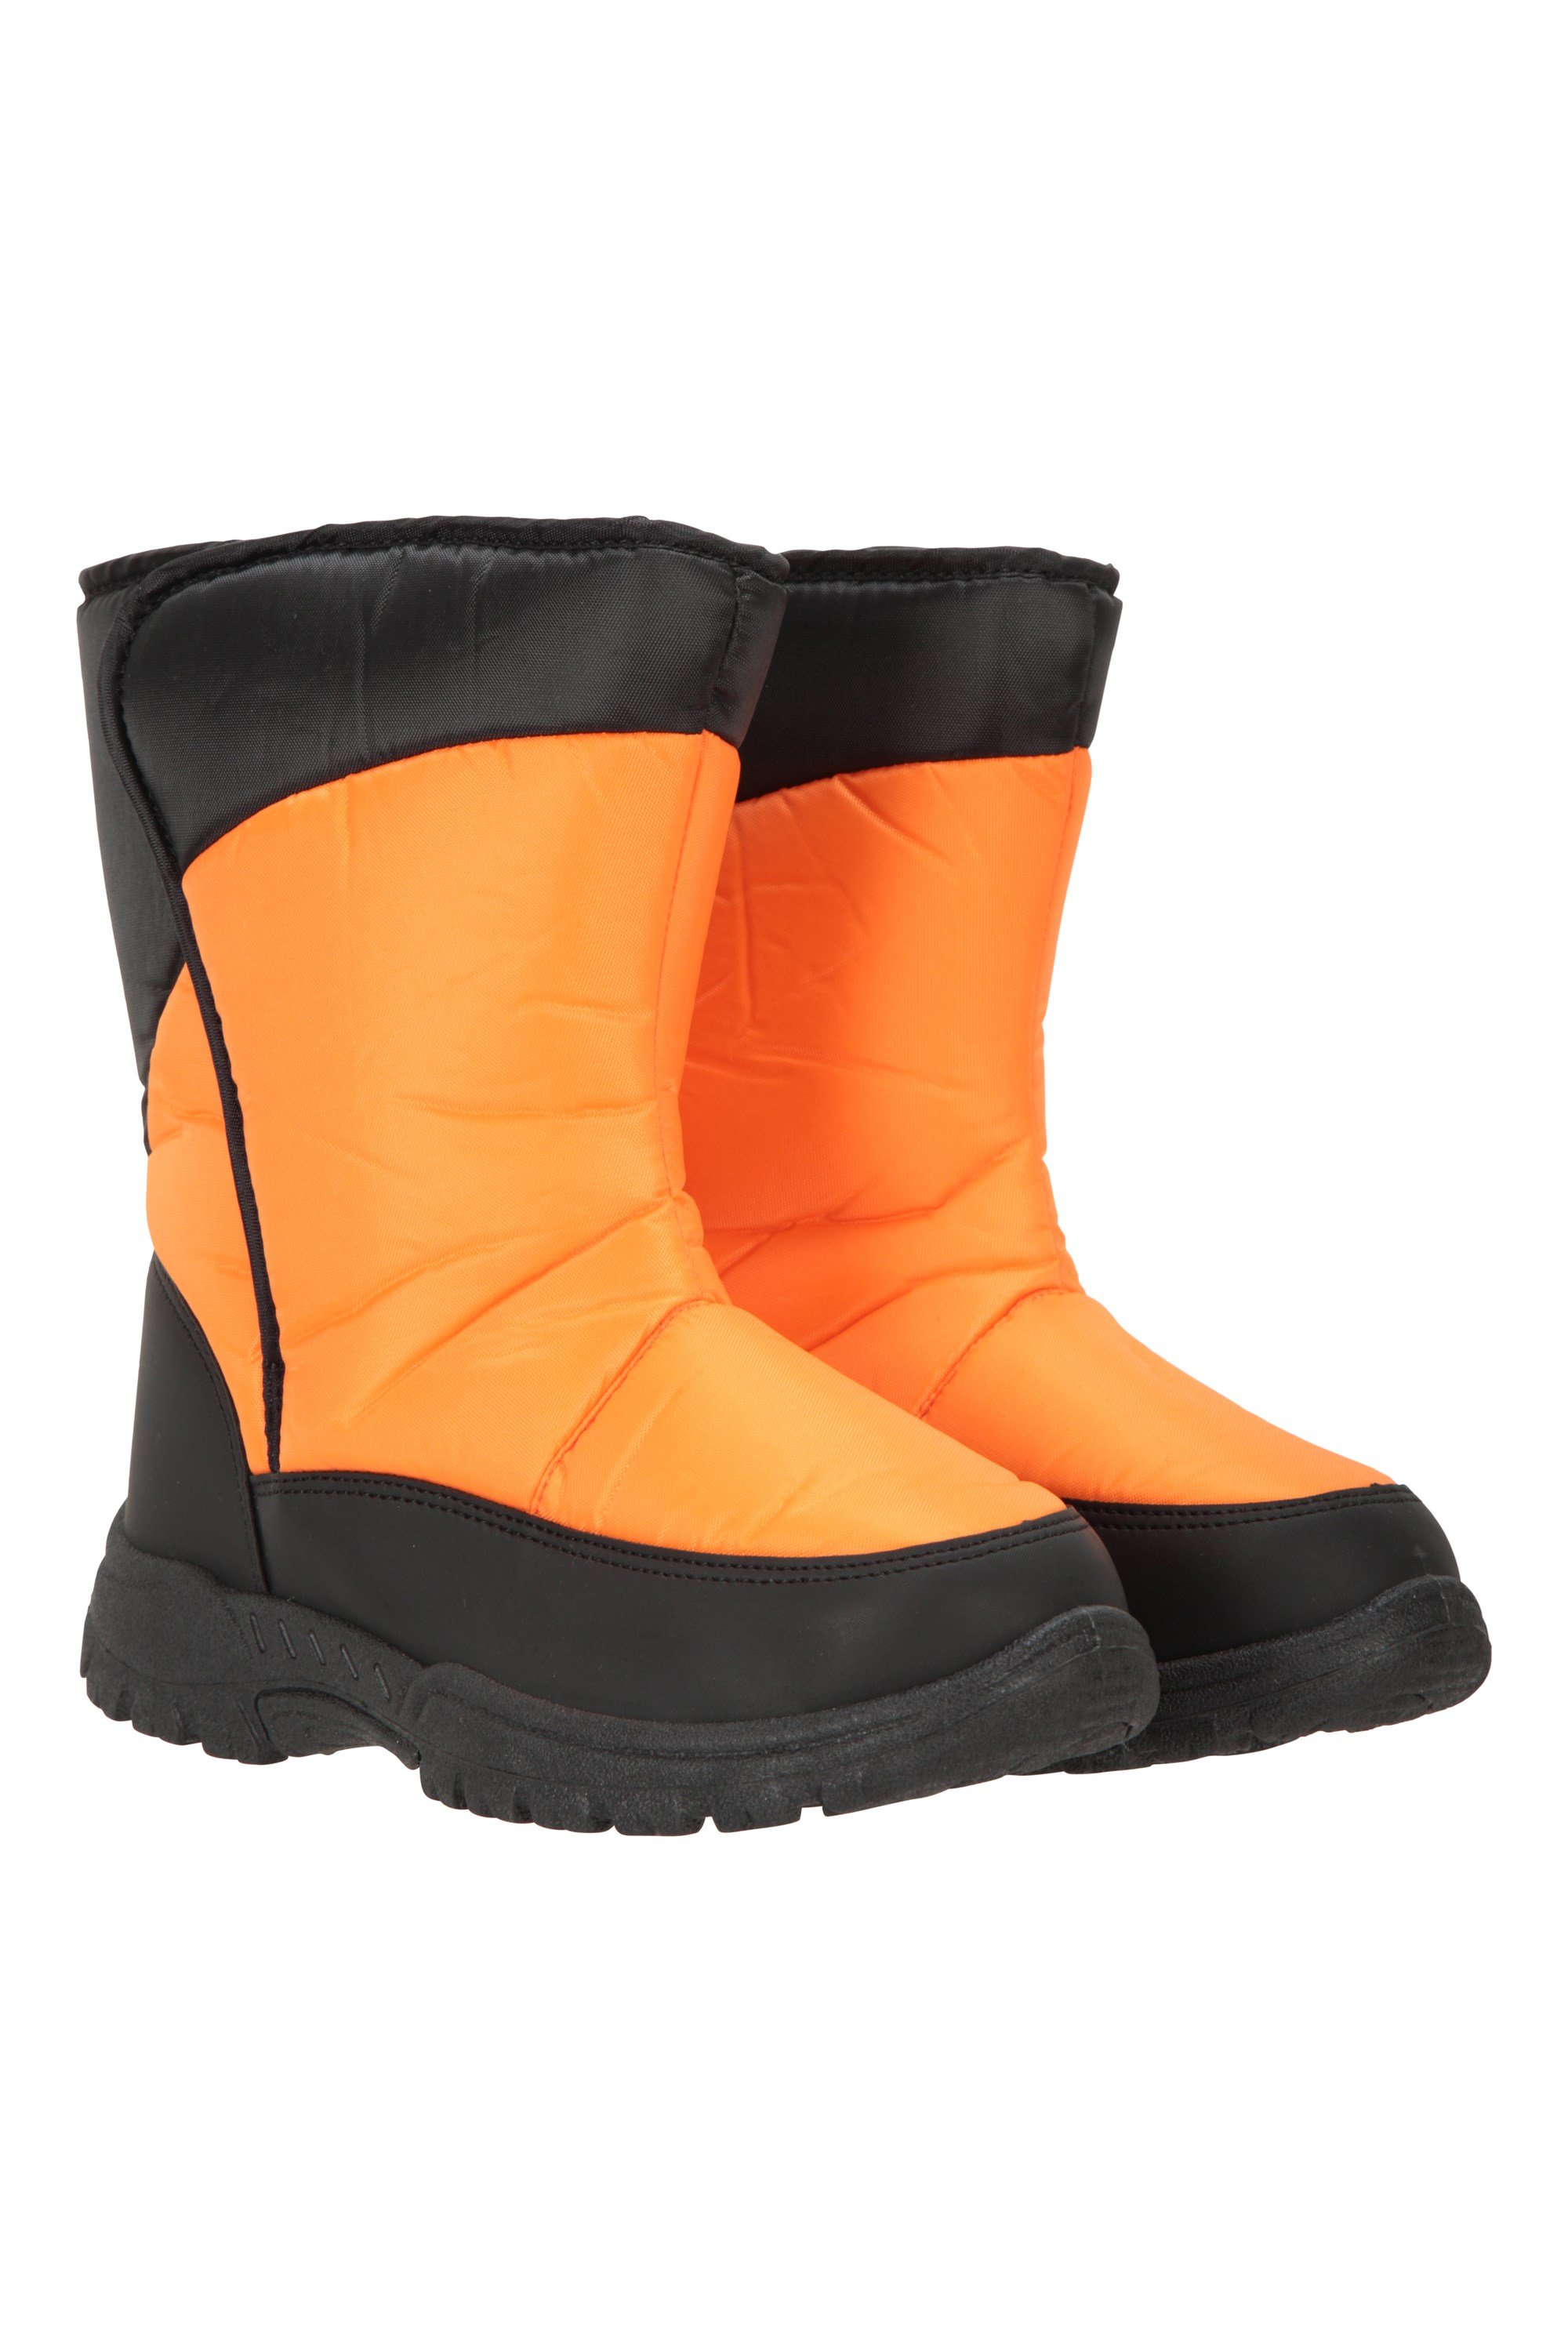 Kids Caribou Single Stripe Adaptive Snow Boots - Orange